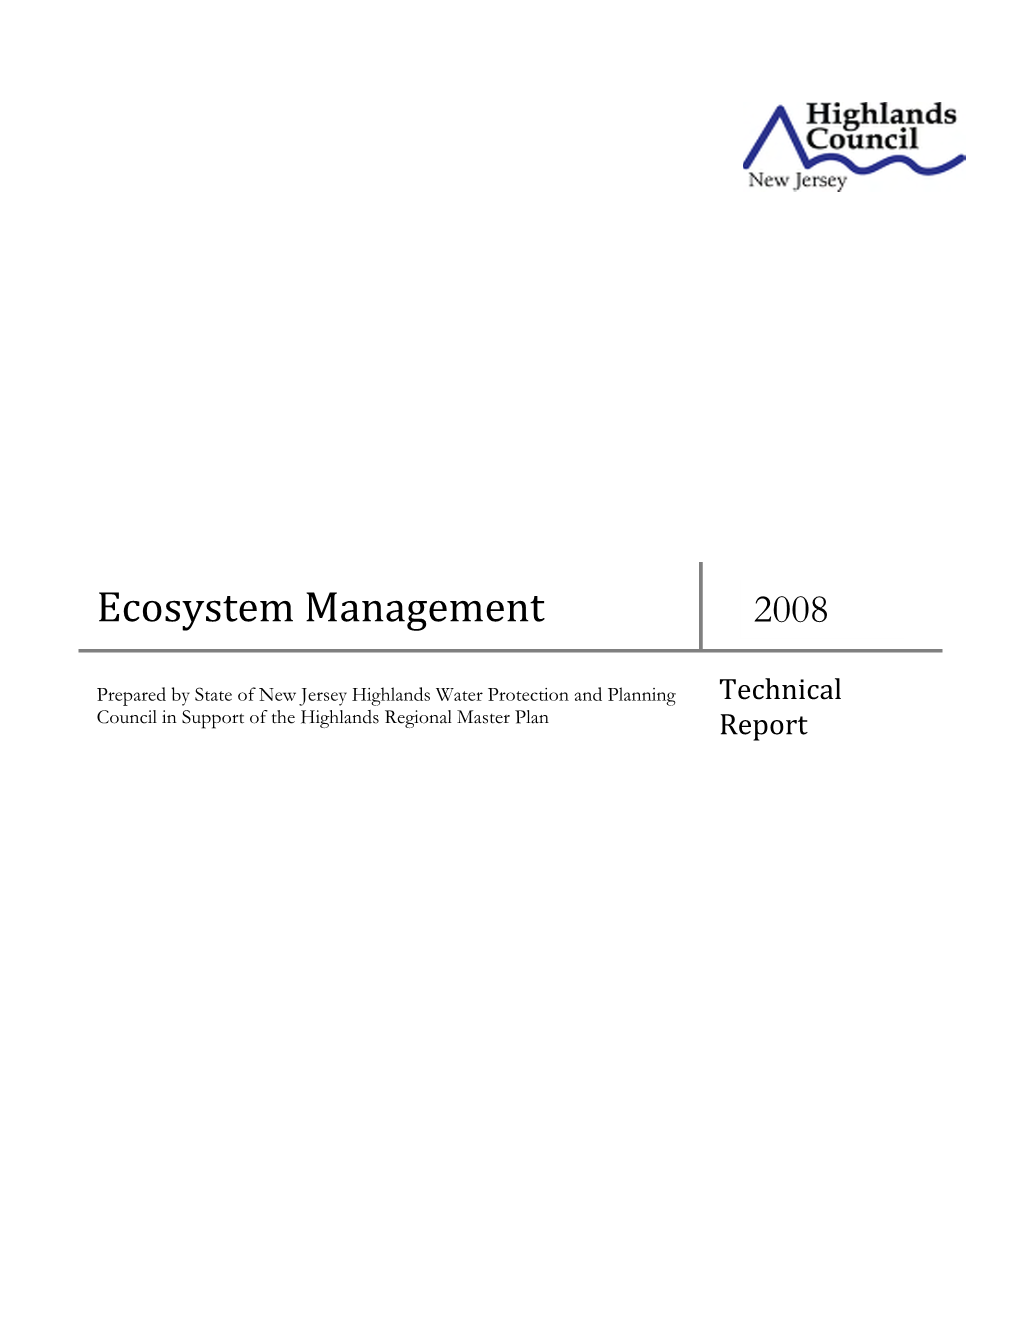 Ecosystem Management Technical Report